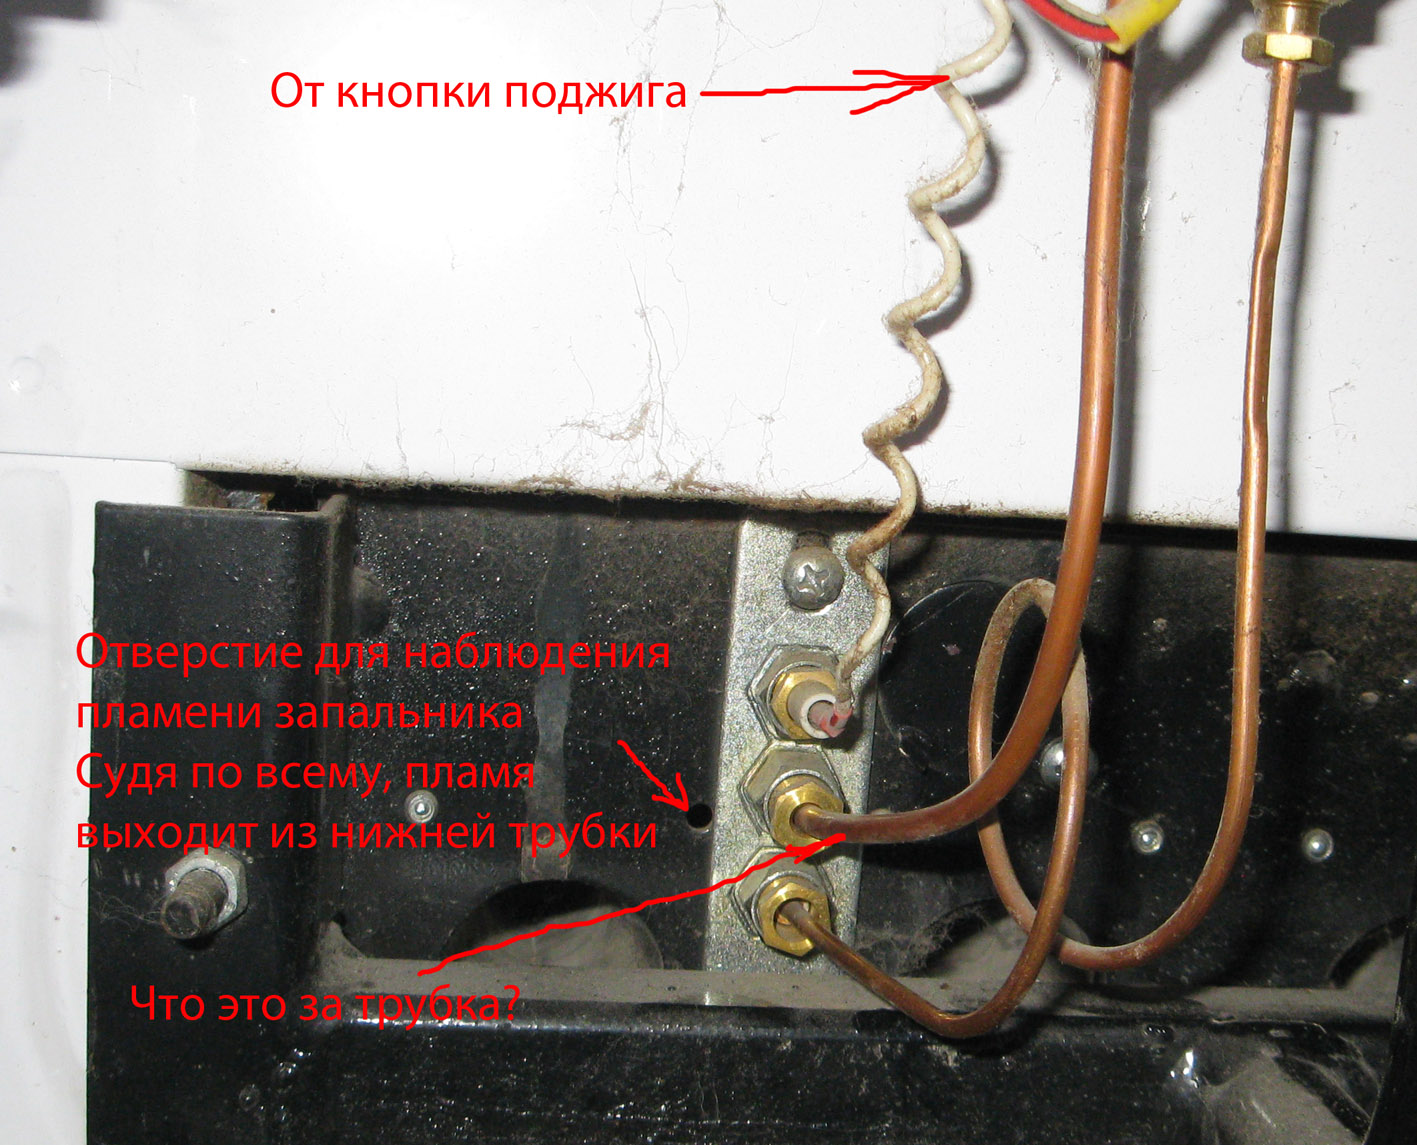 http://elation.kiev.ua/components/com_agora/img/members/5212/IMG-0778.JPG